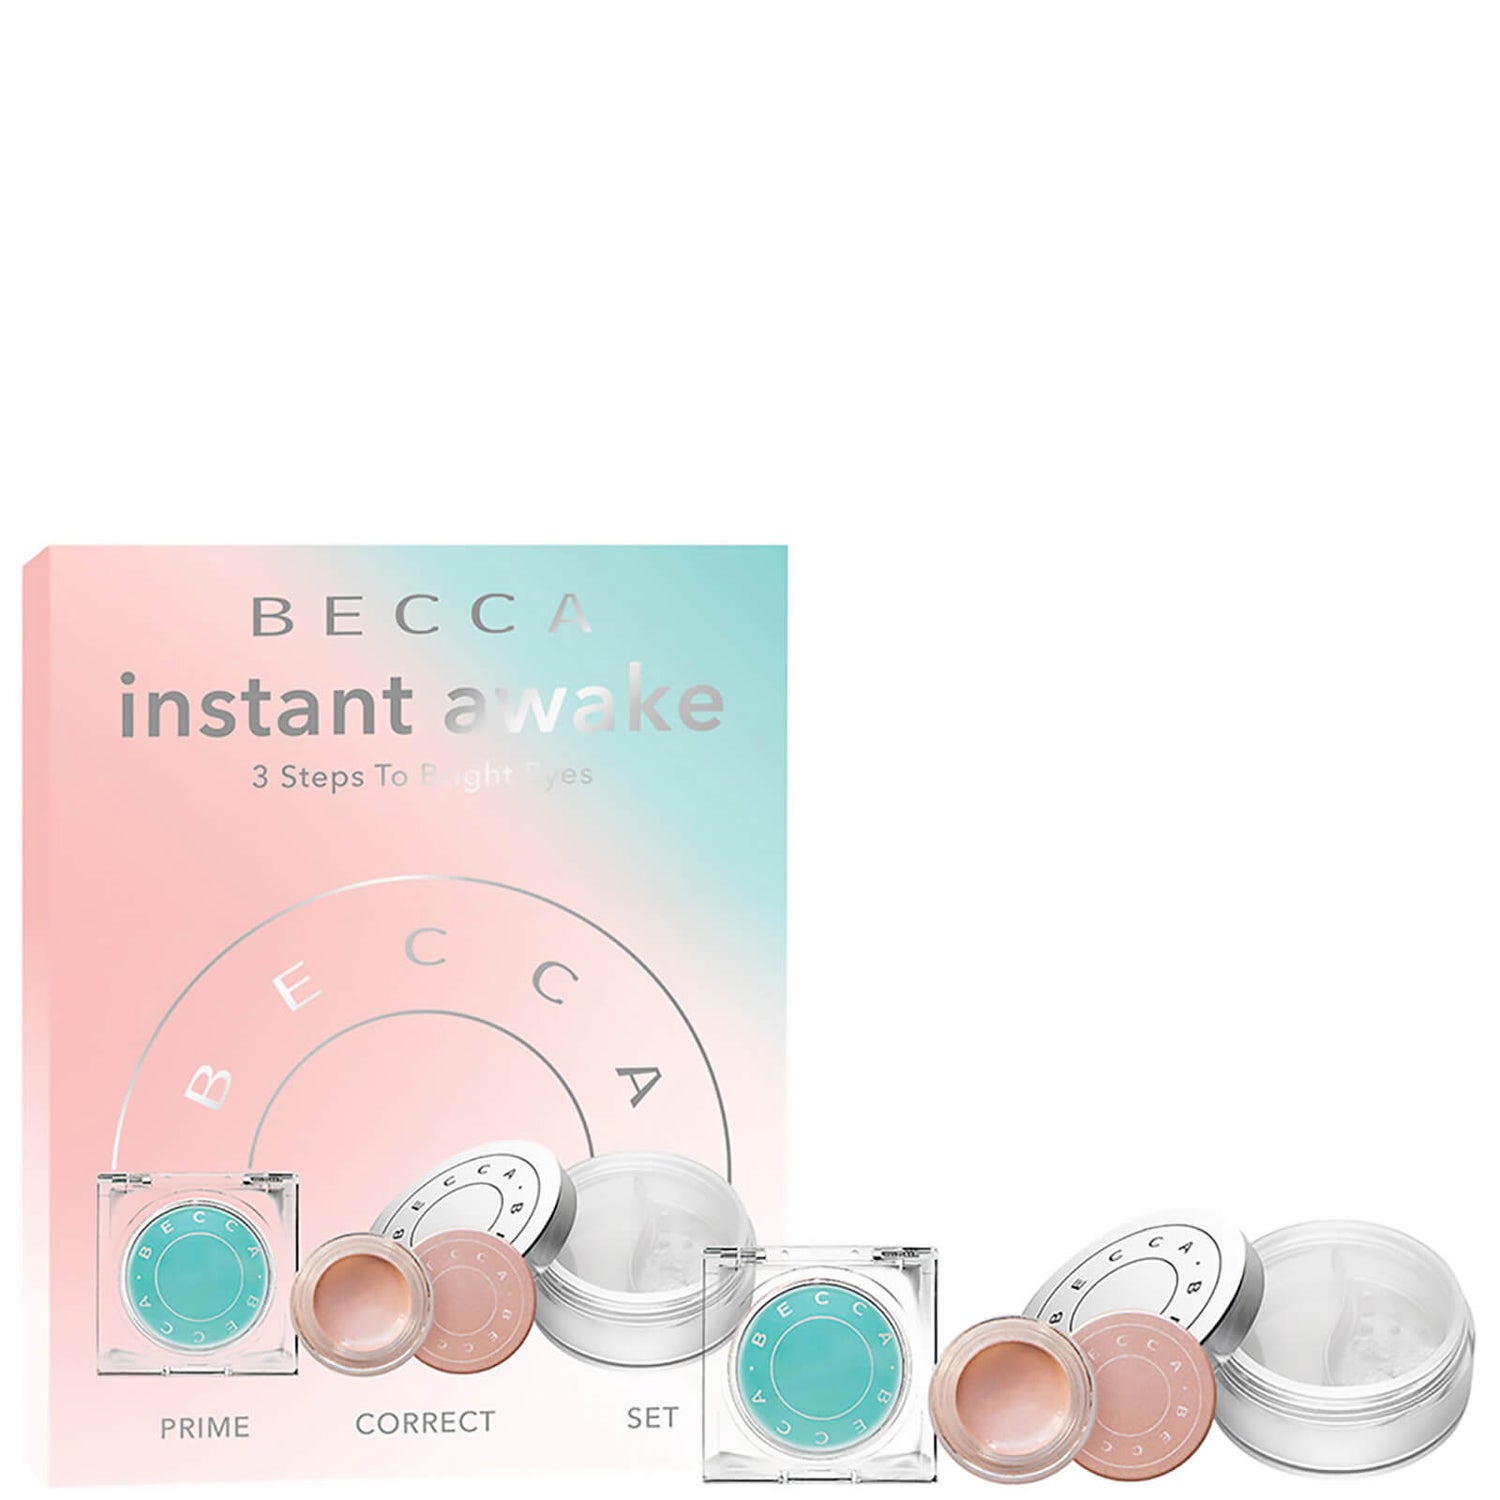 BECCA Instant Awake Eye Kit